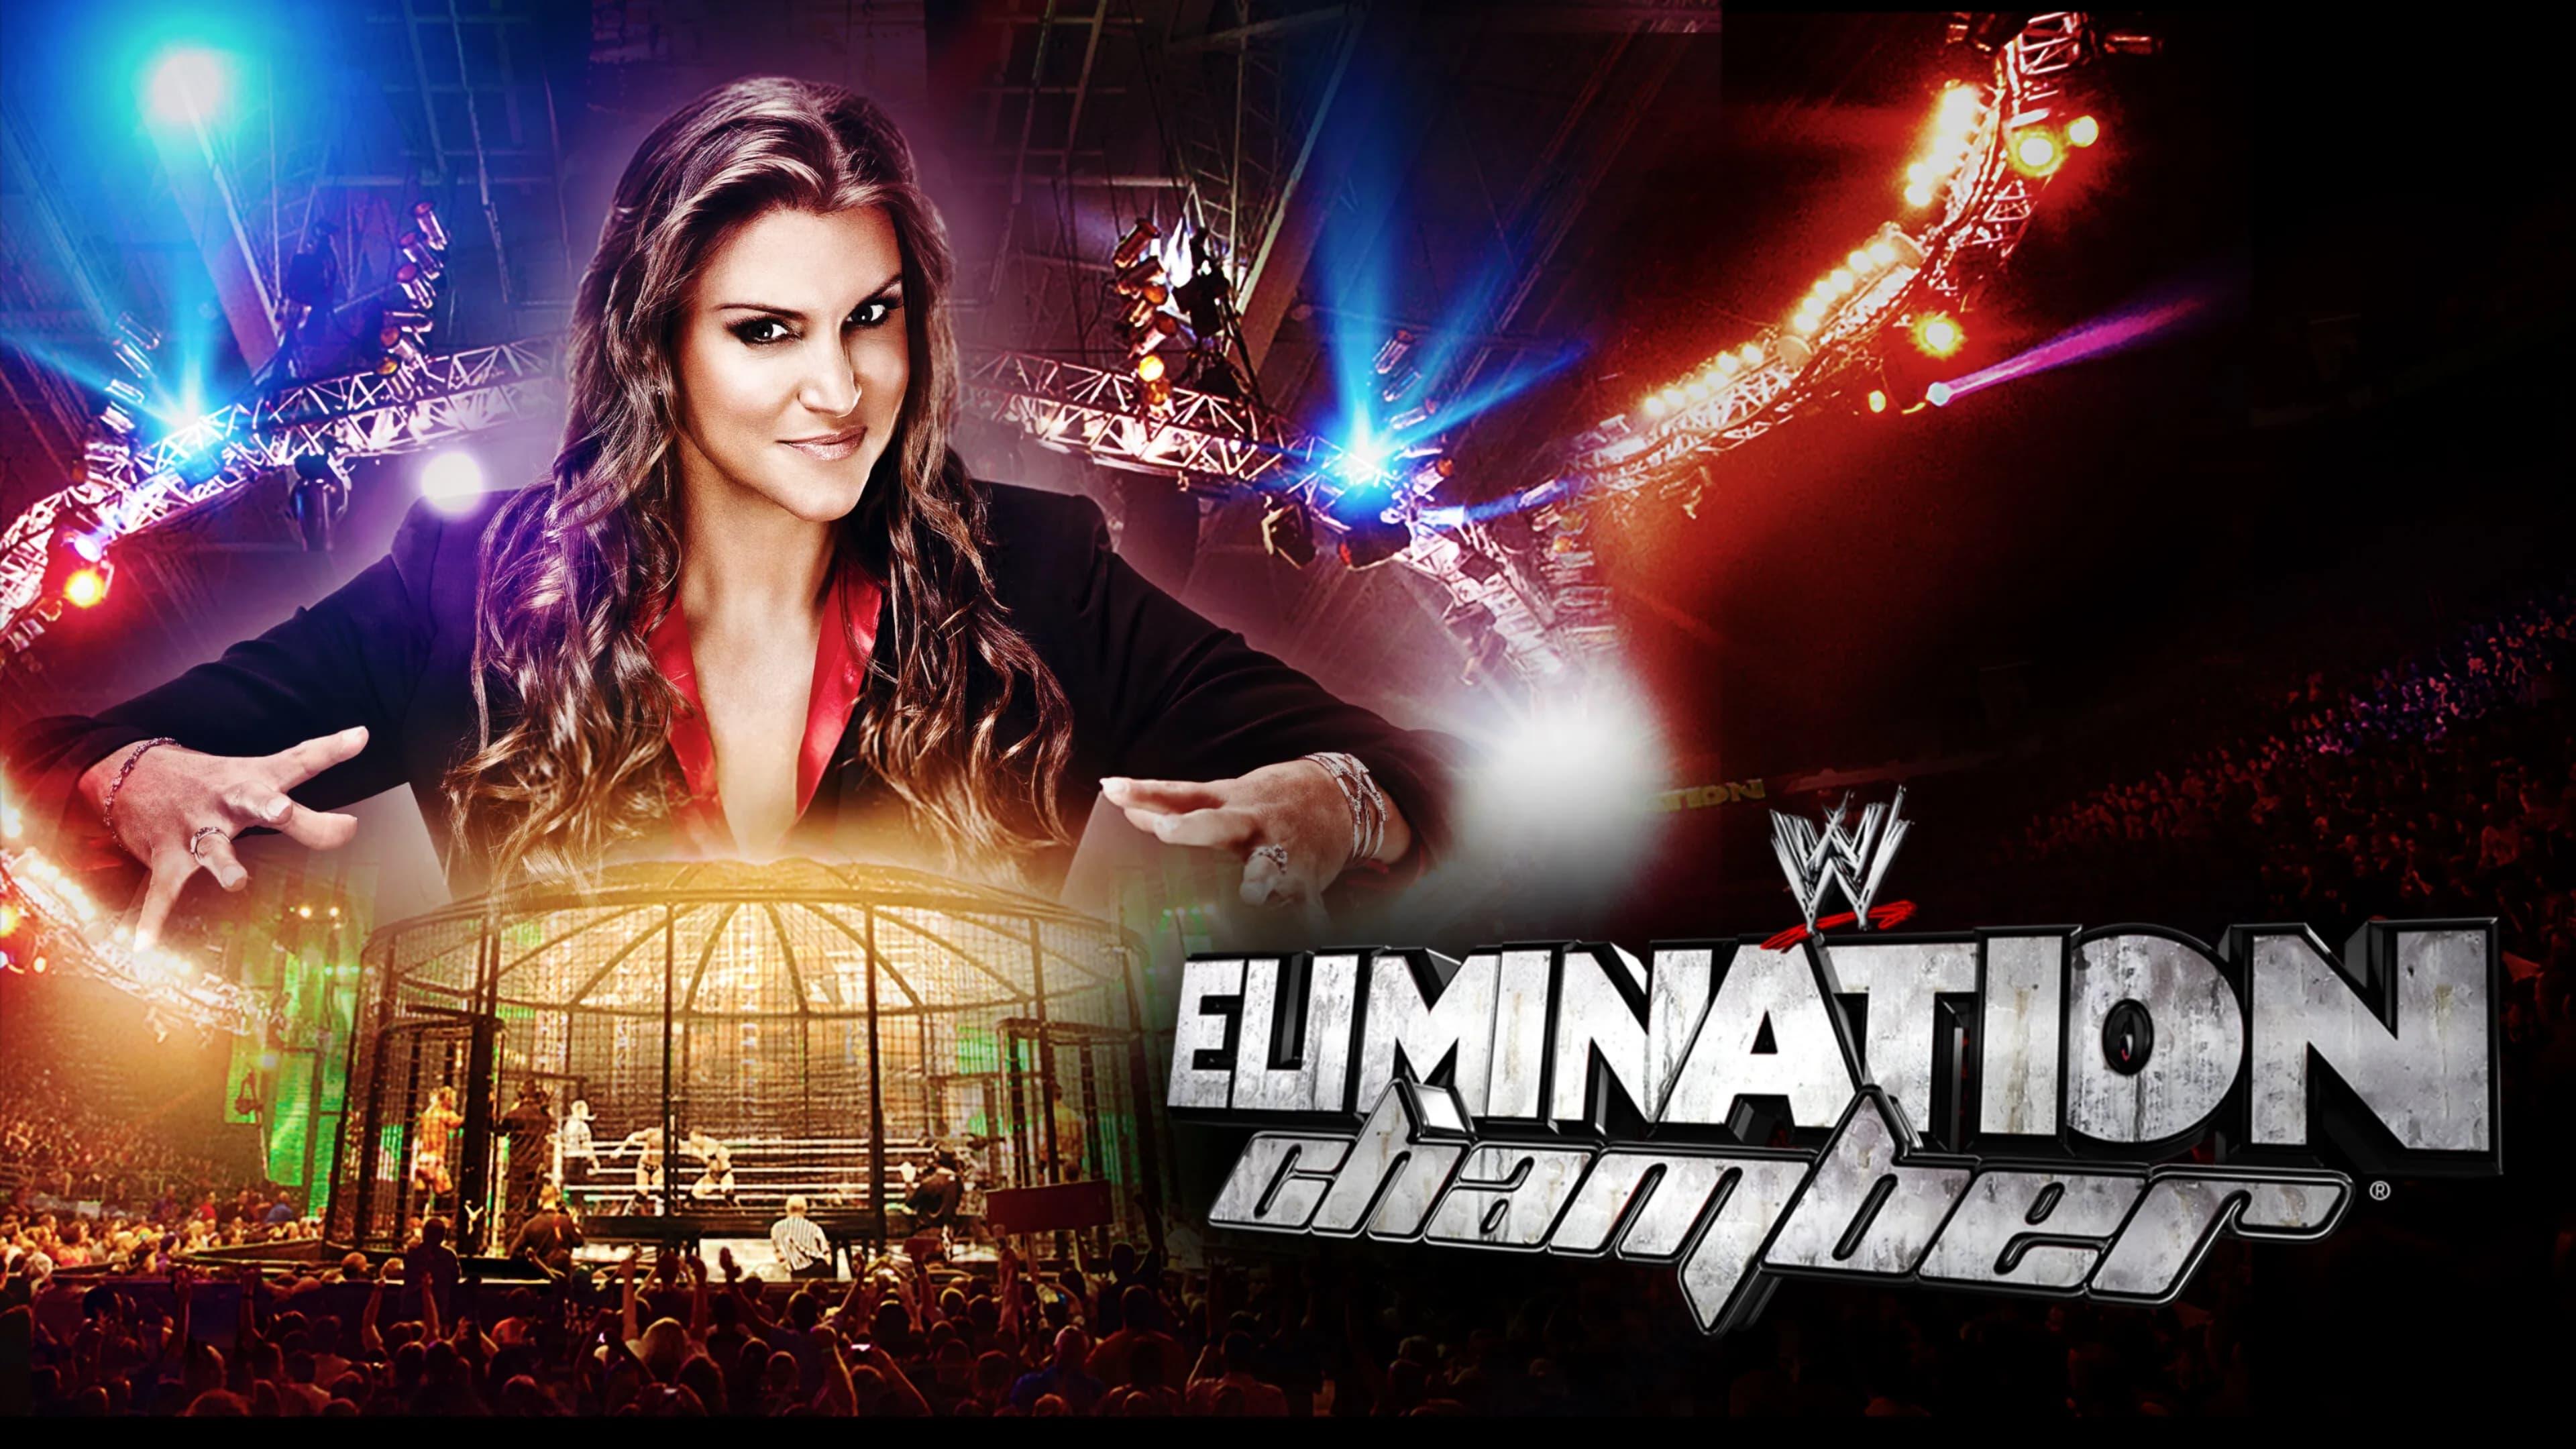 WWE Elimination Chamber 2014 backdrop